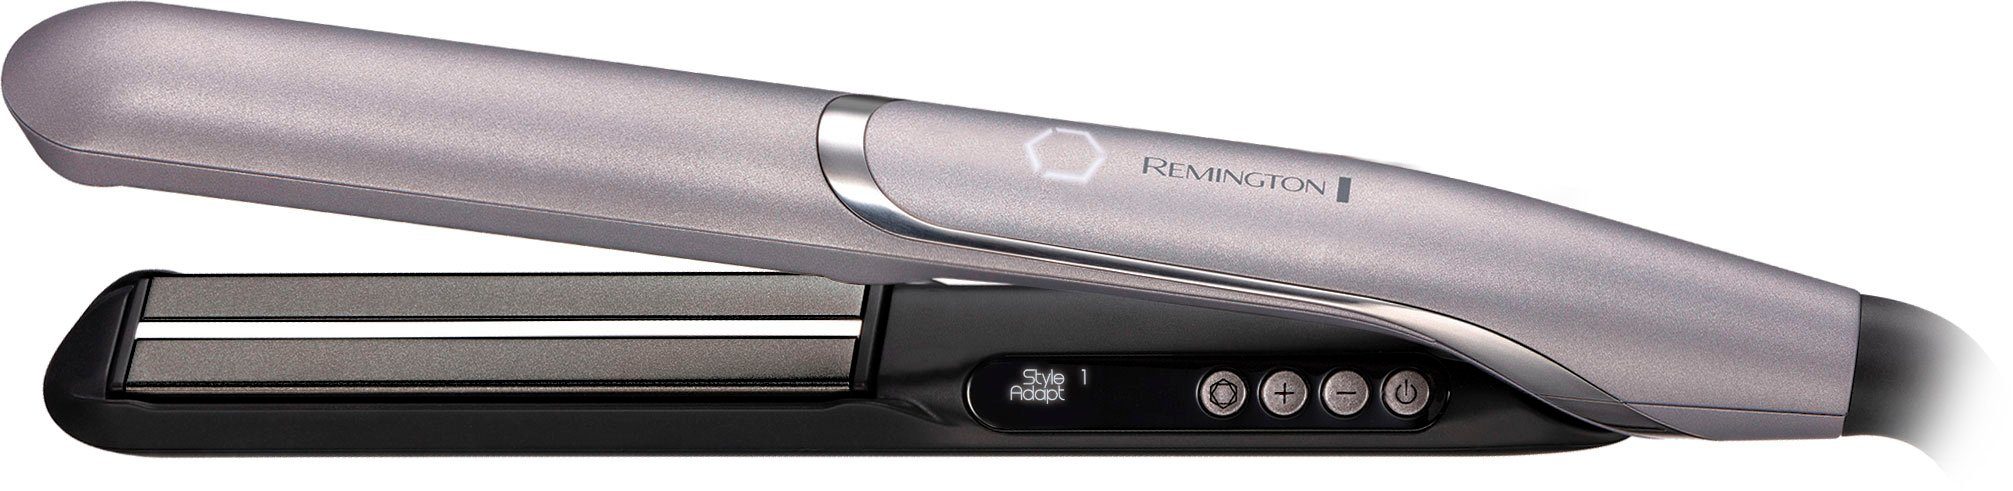 Verkaufshit Remington Glätteisen PROluxe You™ Funktion, S9880 StyleAdapt™ Memory Keramik-Beschichtung, Haarglätter, lernfähiger Nutzerprofile 2